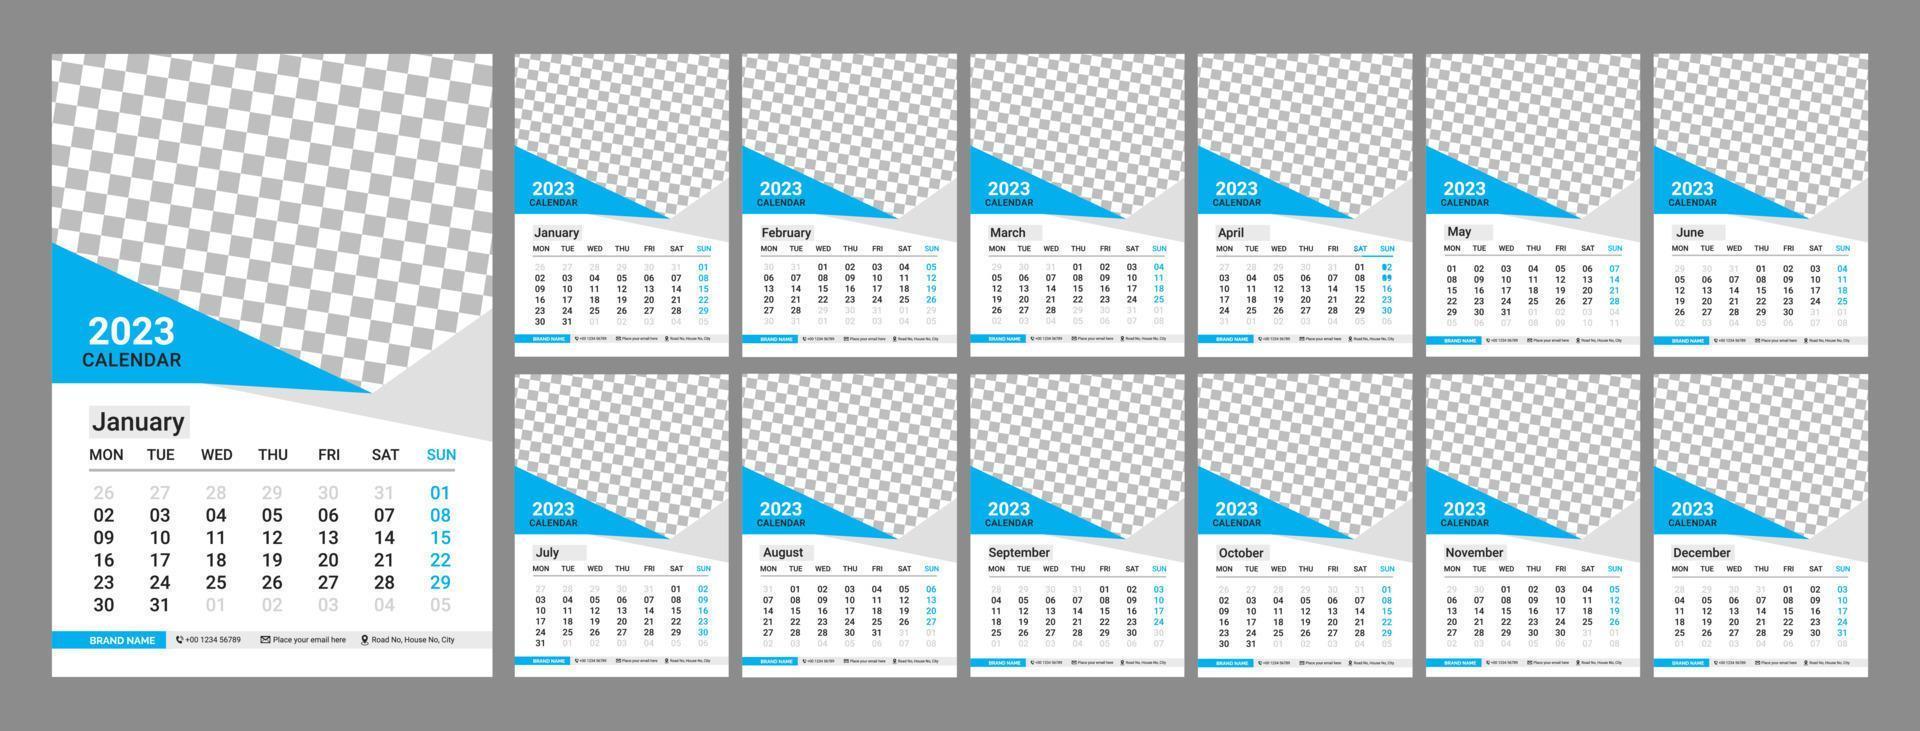 Wall calendar desing 2023. Monthly calender 2023. 12 months. Editable calendar page template vector